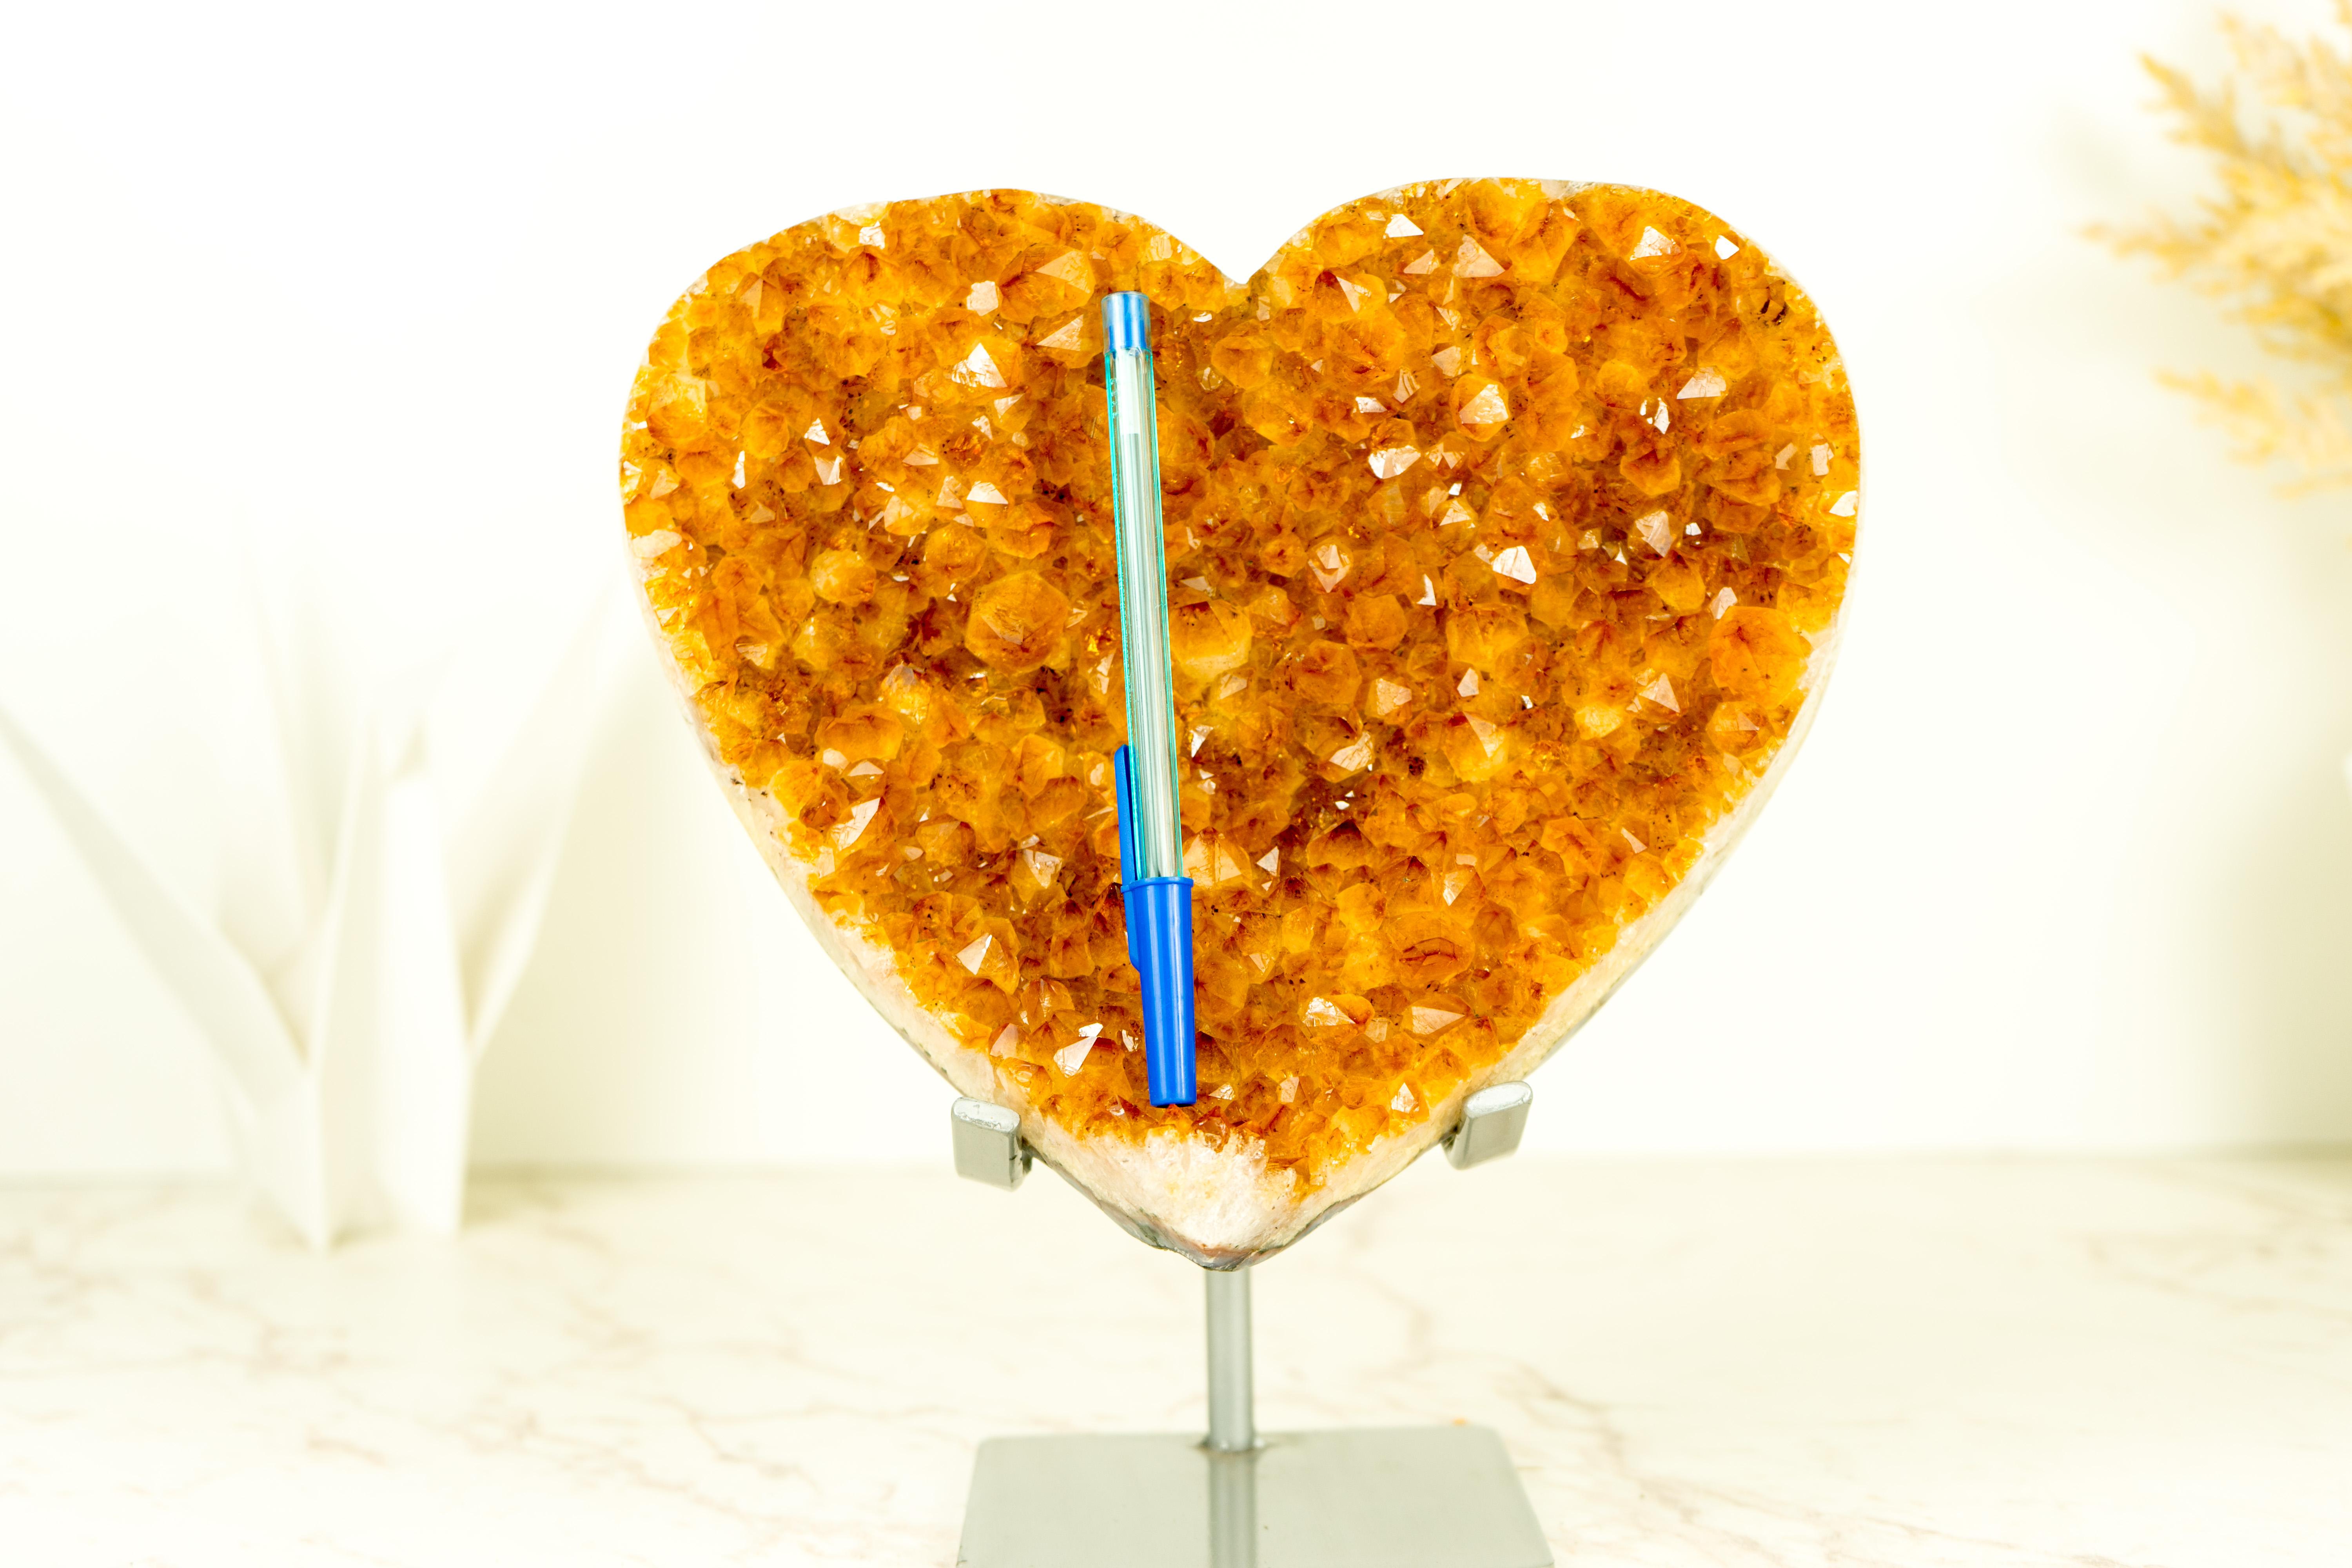 Crystal Citrine Heart Sculpture with Deep Orange, Shiny High-Grade Citrine Druzy For Sale 7